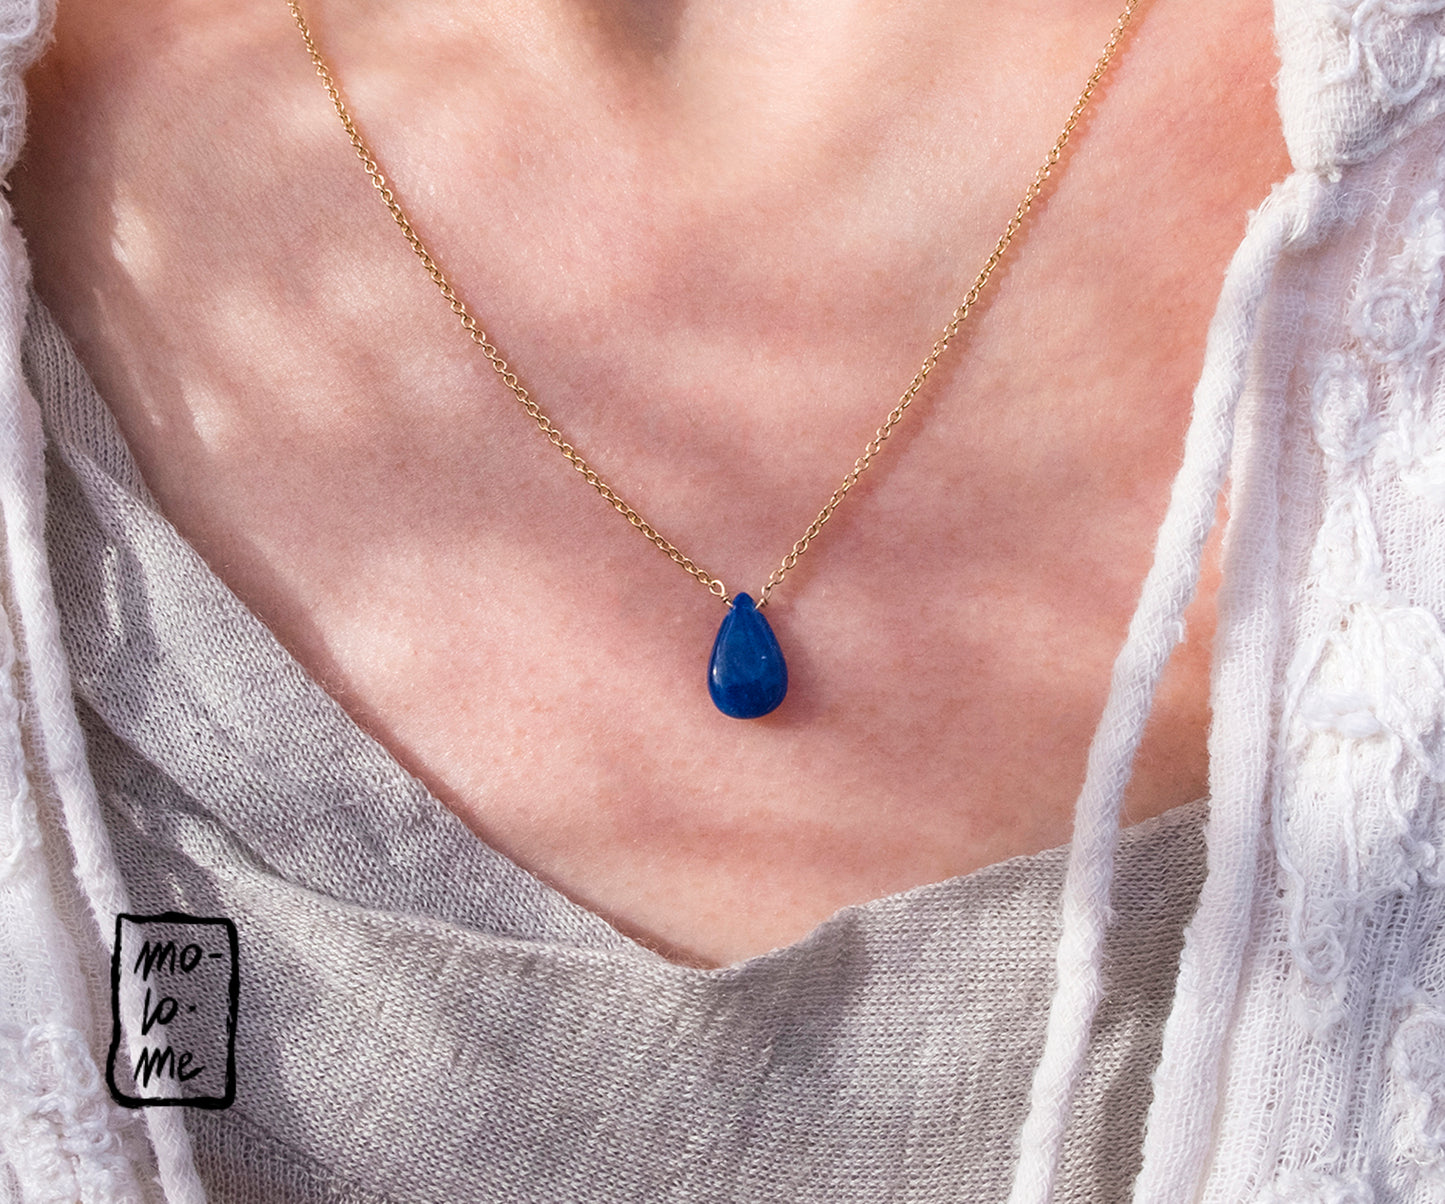 Lala Lapis Lazuli Necklace by Molo Me on a model